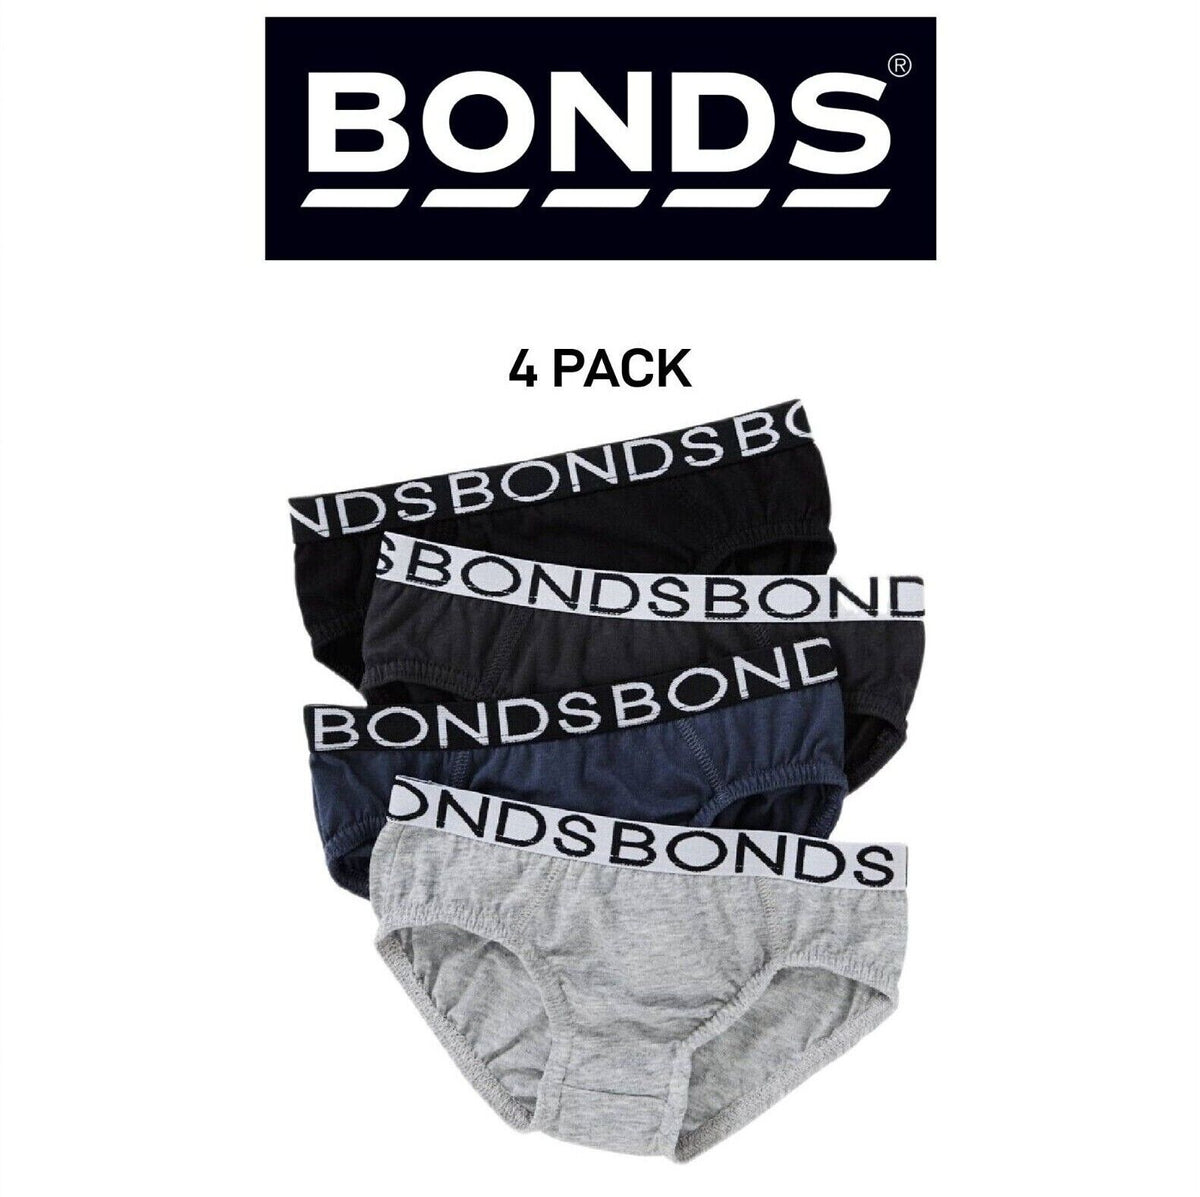 Bonds Boys Brief Underwear Breathable Cotton Rich Fabric 4 Pack UZW14A